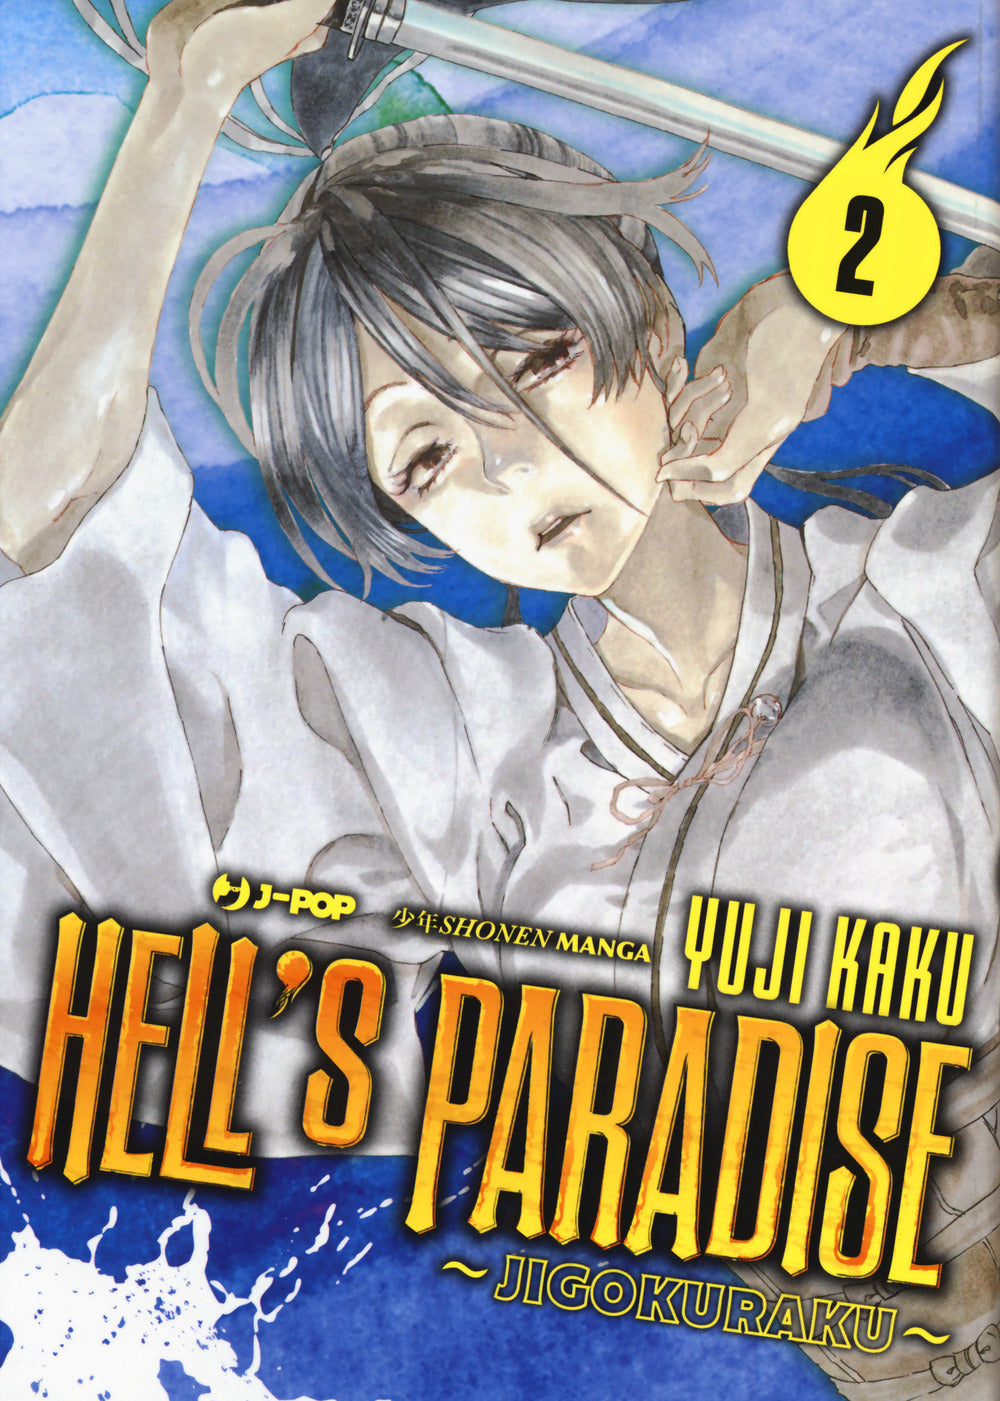 Hell's paradise. Jigokuraku. Vol. 2.